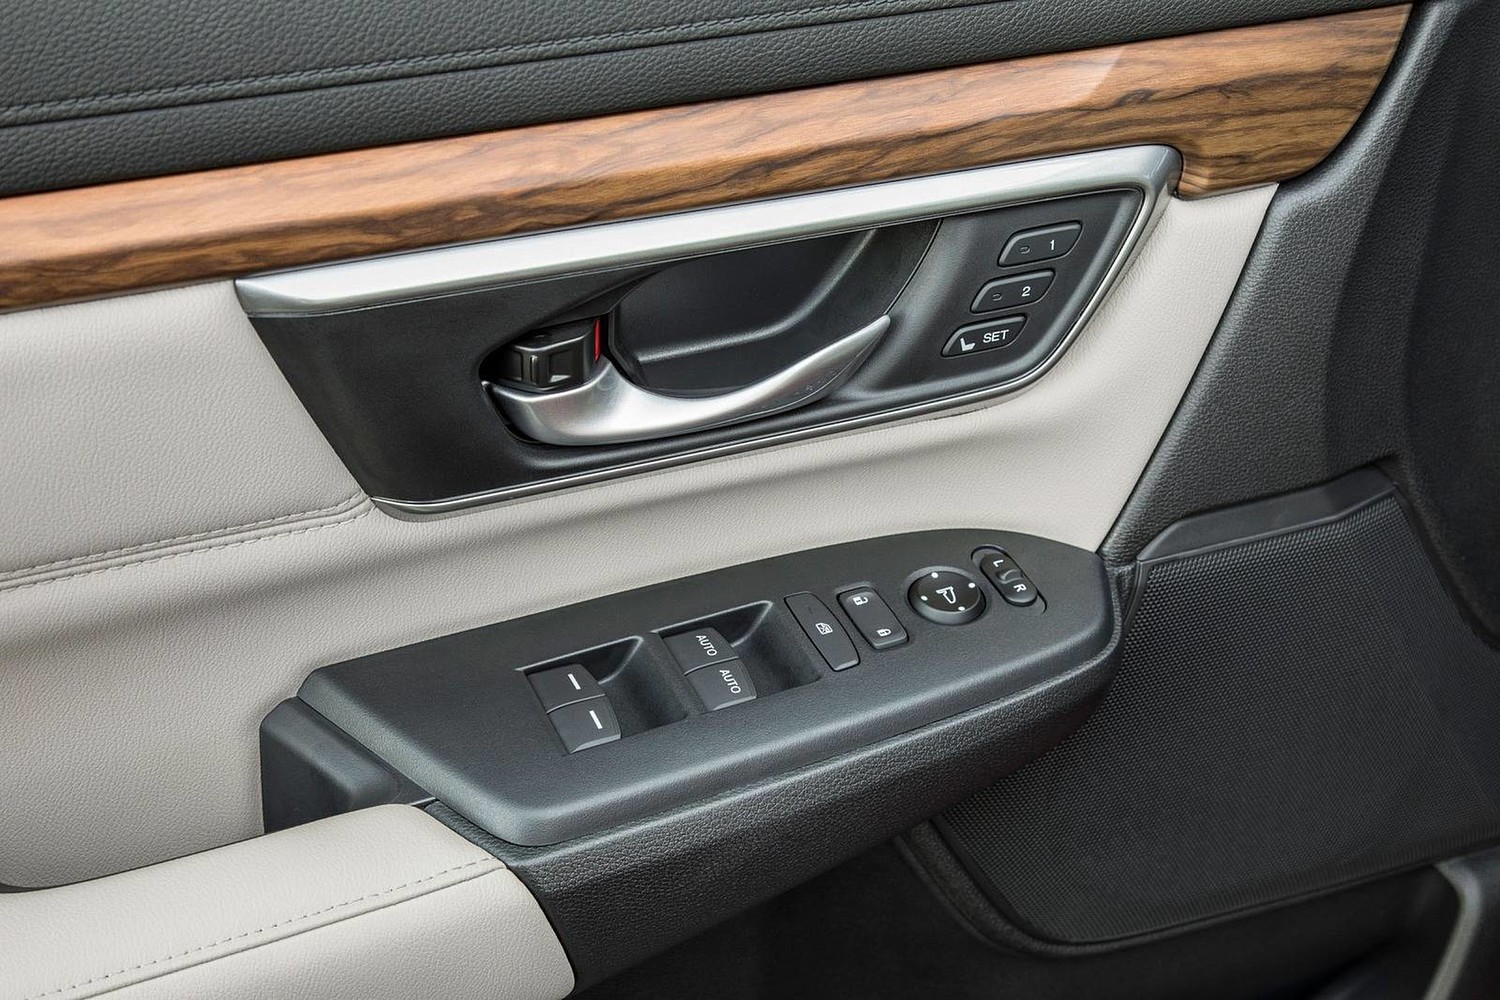 Honda CR-V Touring 4dr SUV Interior Detail (2017 model year shown)